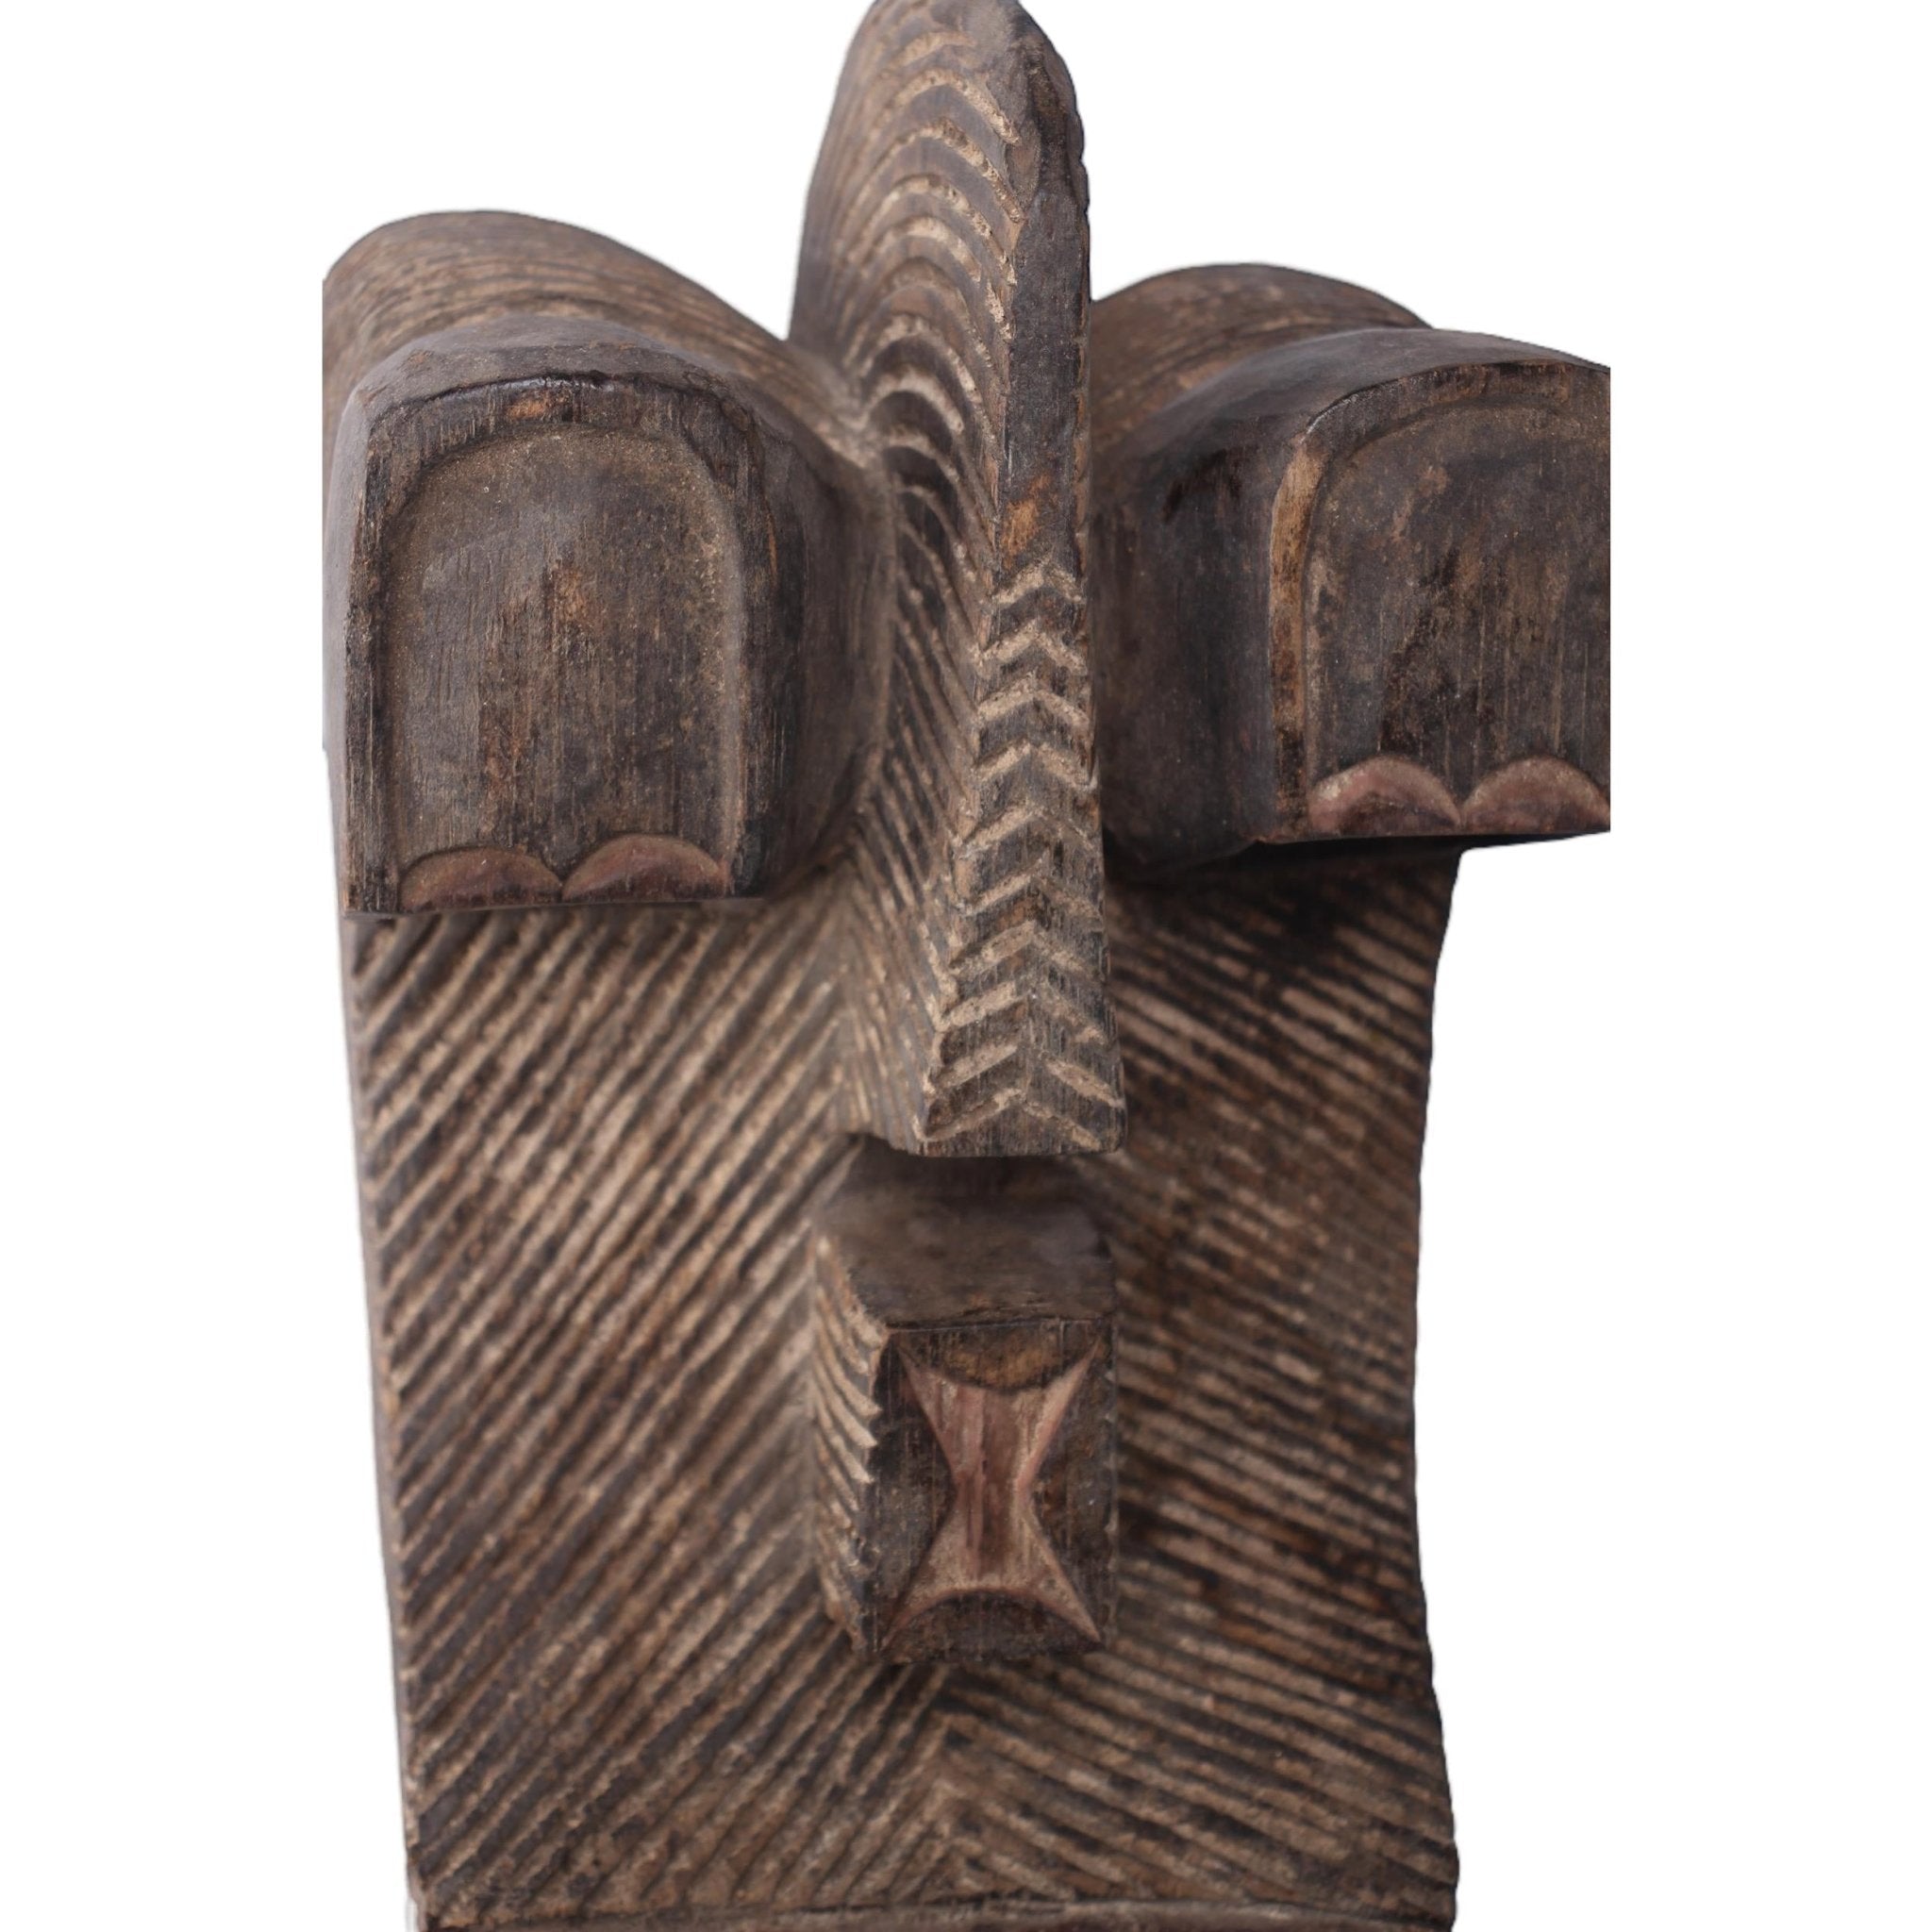 Basonge/Songye Tribe Mask ~13.4" Tall - African Angel Art - Mask